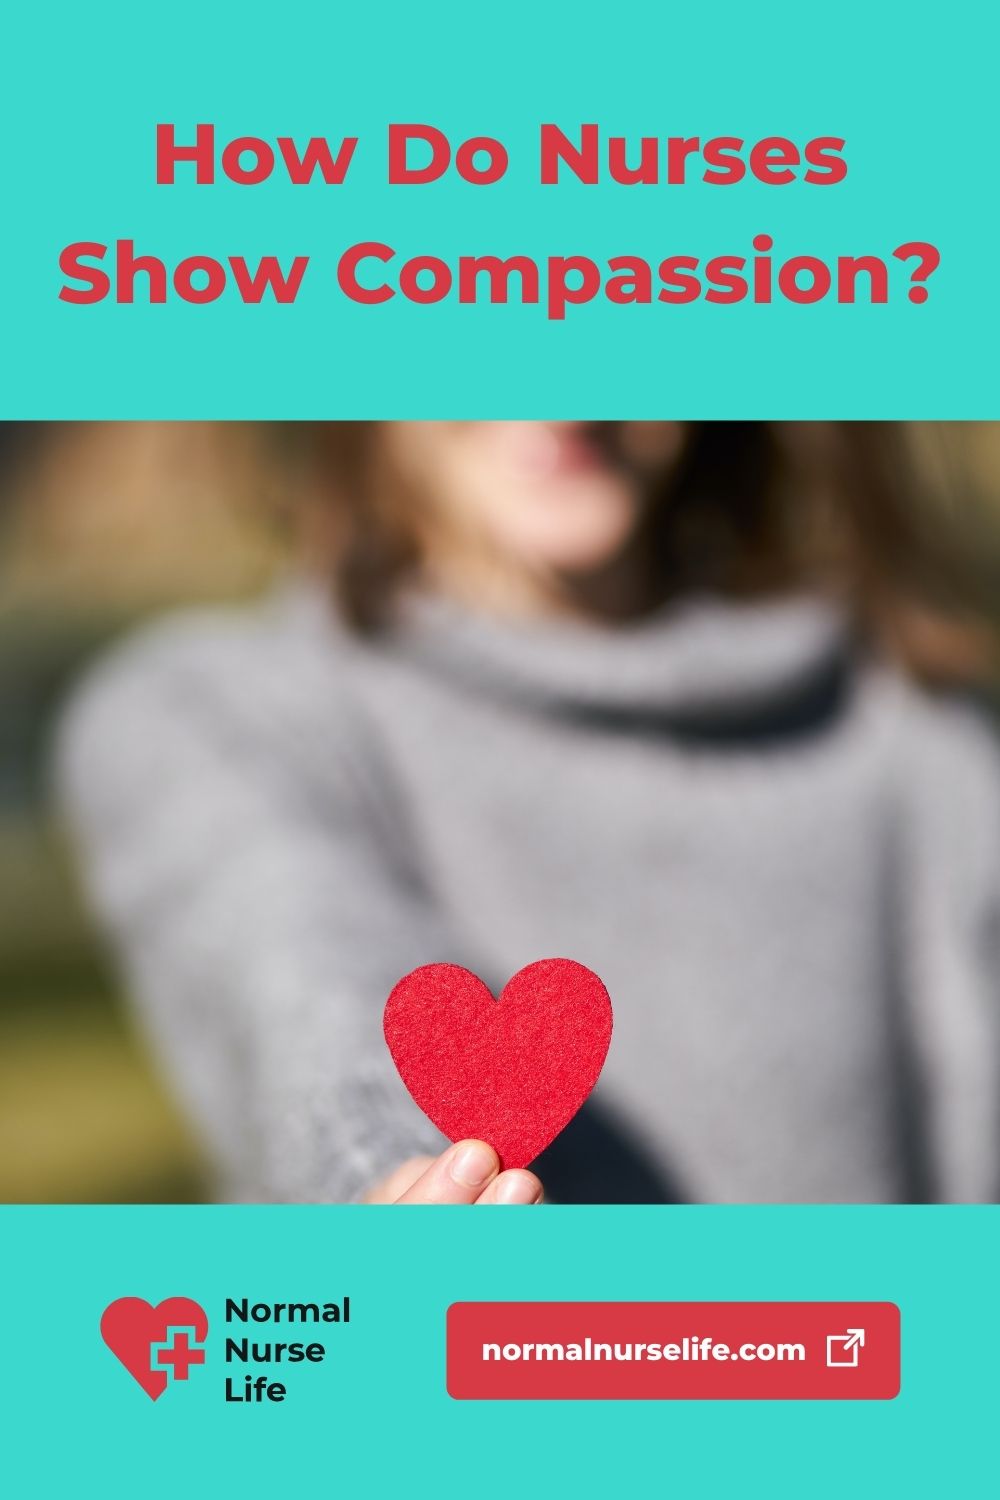 How do you show compassion in nursing